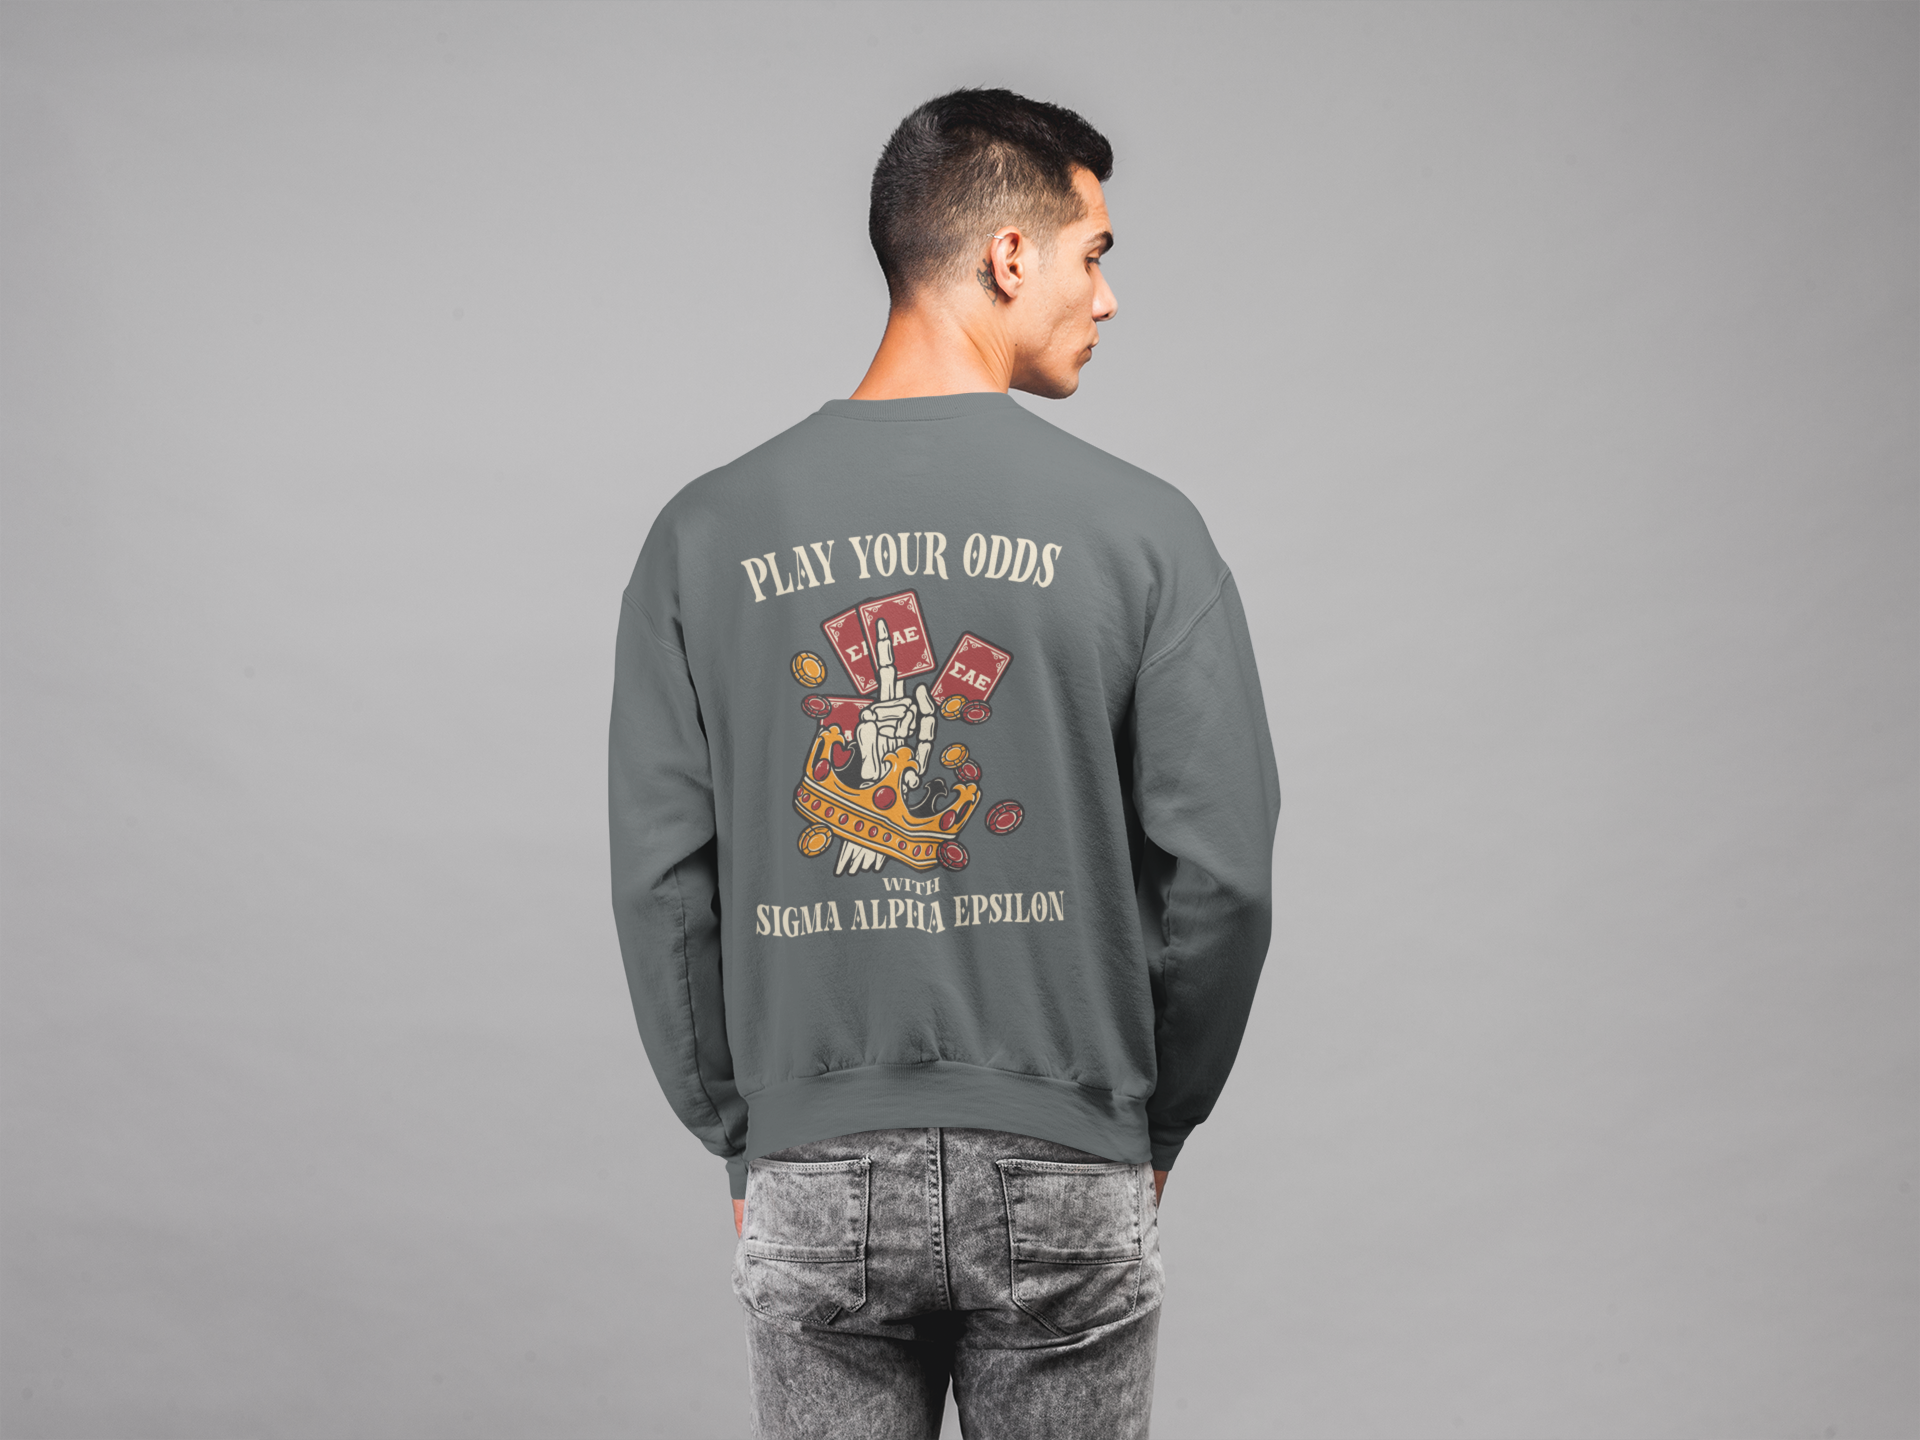 Grey Sigma Alpha Epsilon Graphic Crewneck Sweatshirt | Play Your Odds | Sigma Alpha Epsilon Clothing and Merchandise